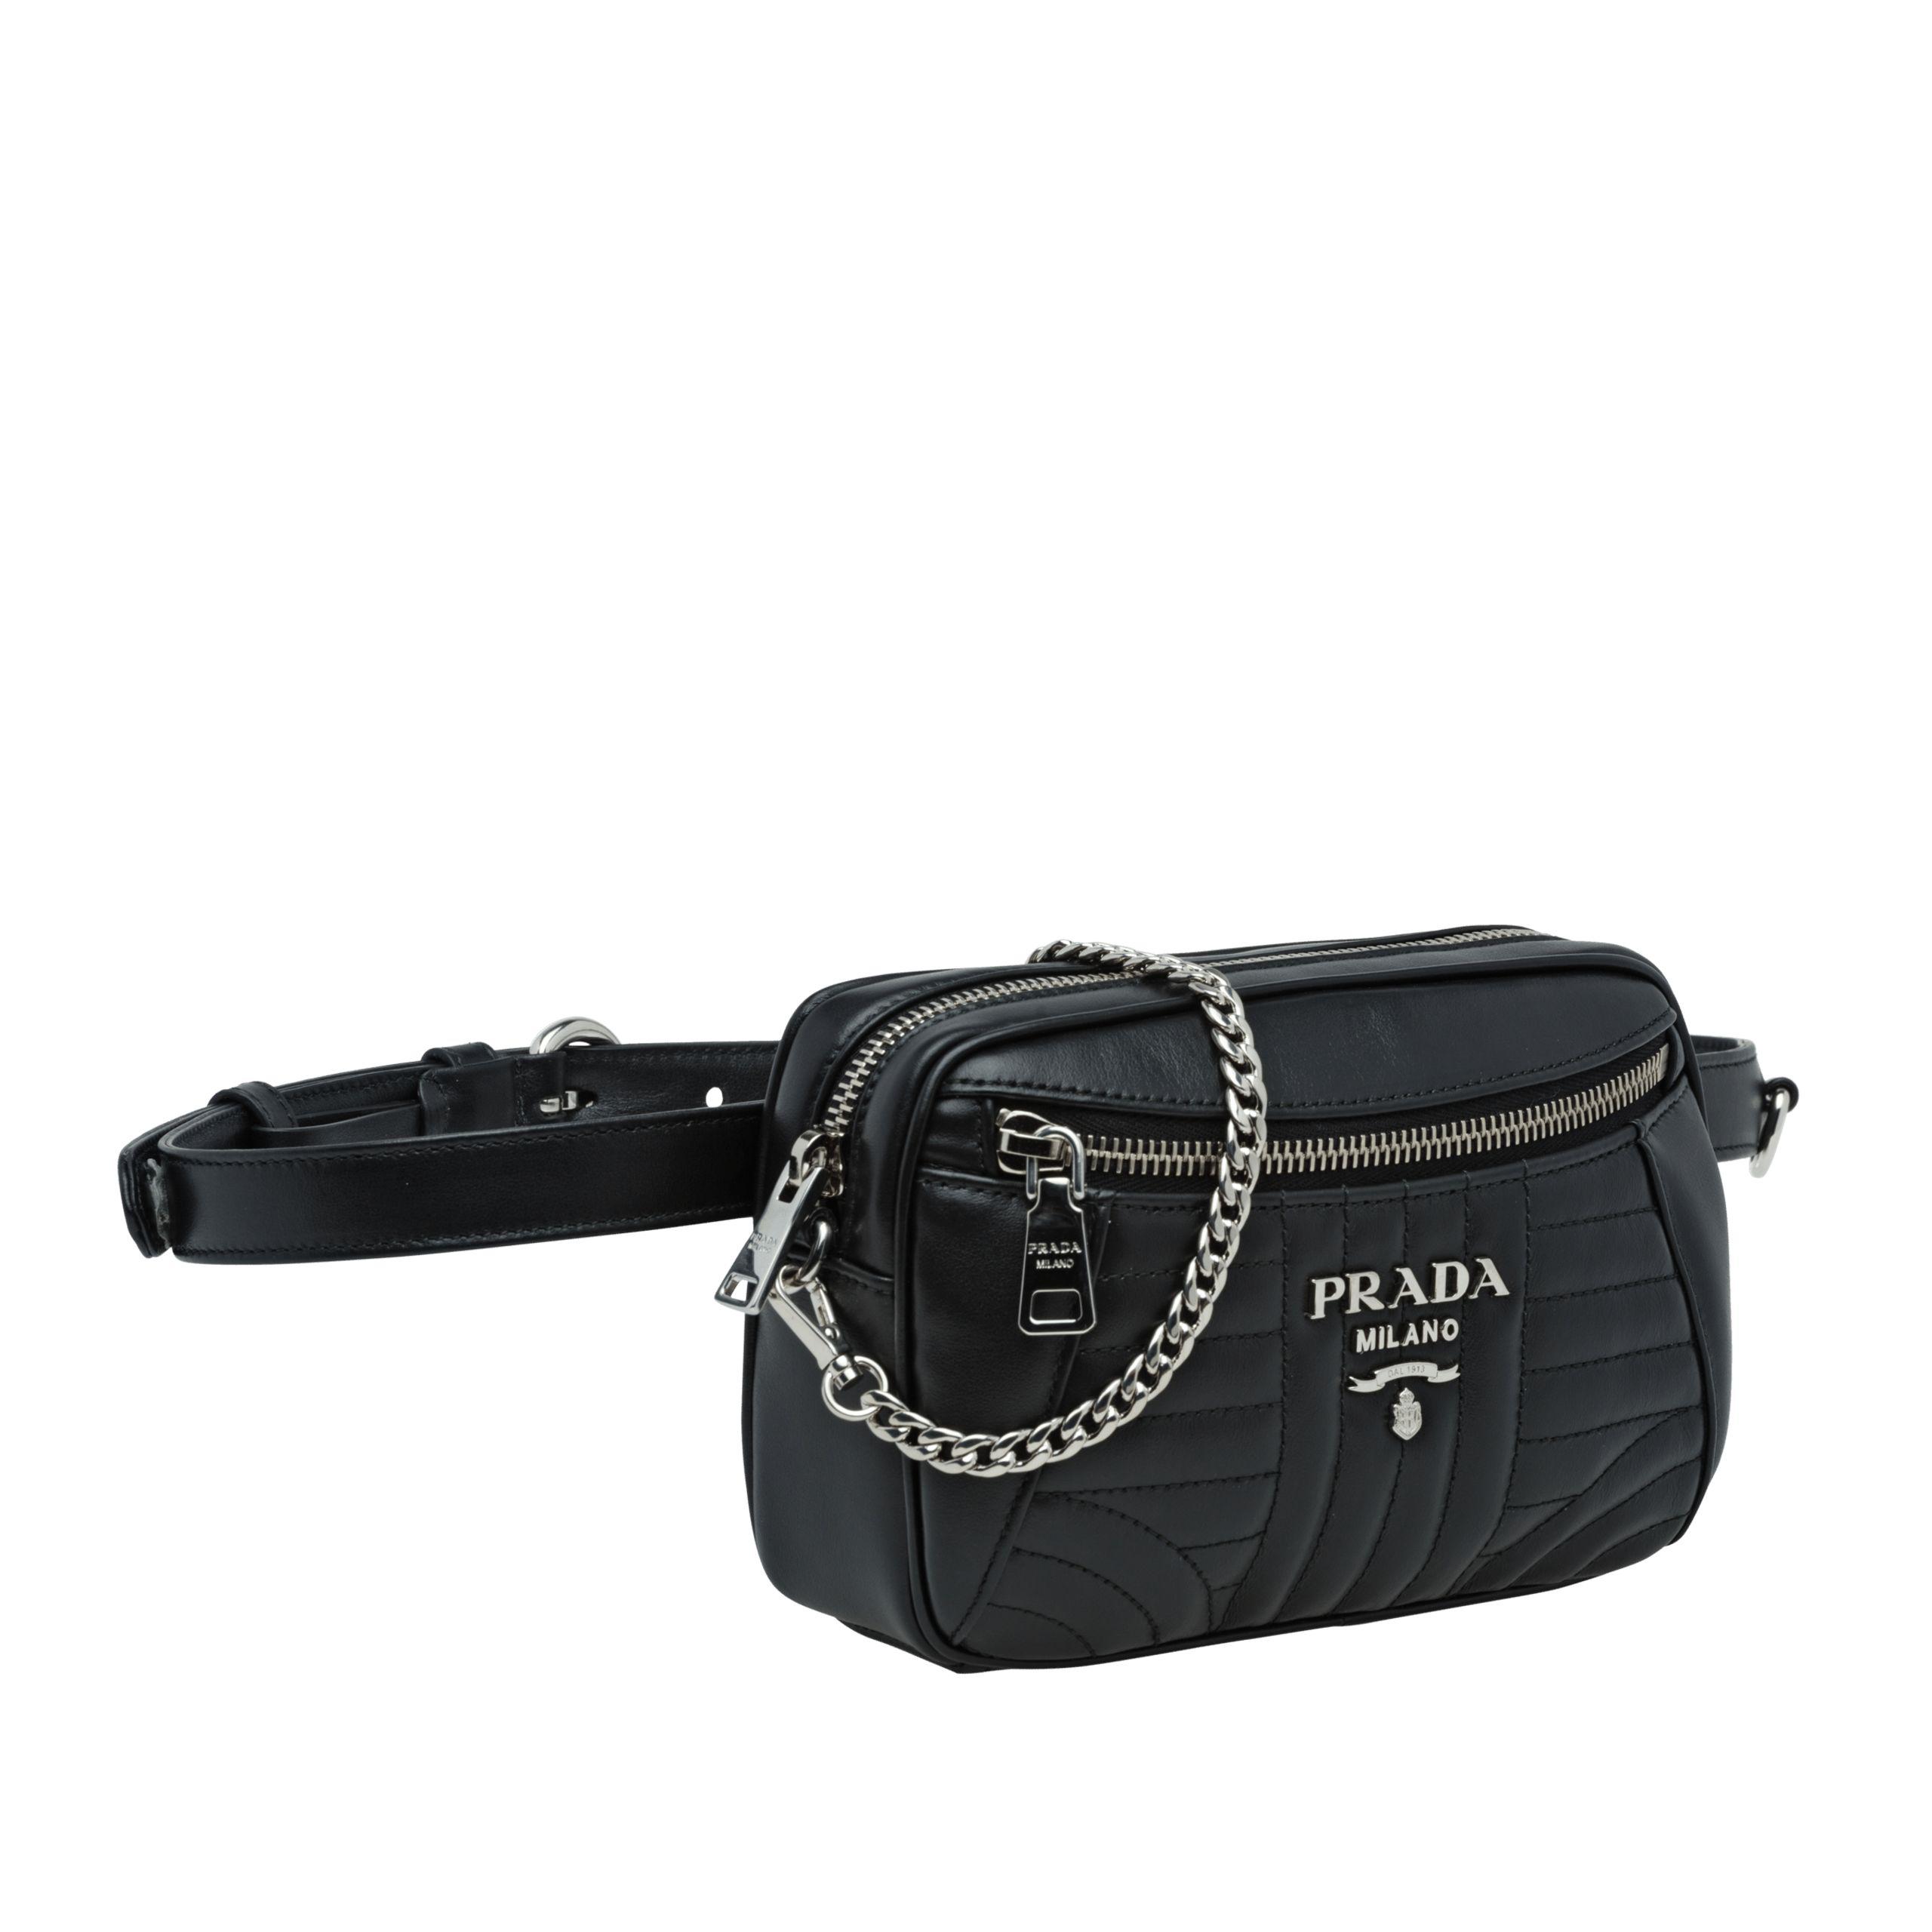 Prada Diagramme Leather Belt Bag in Black